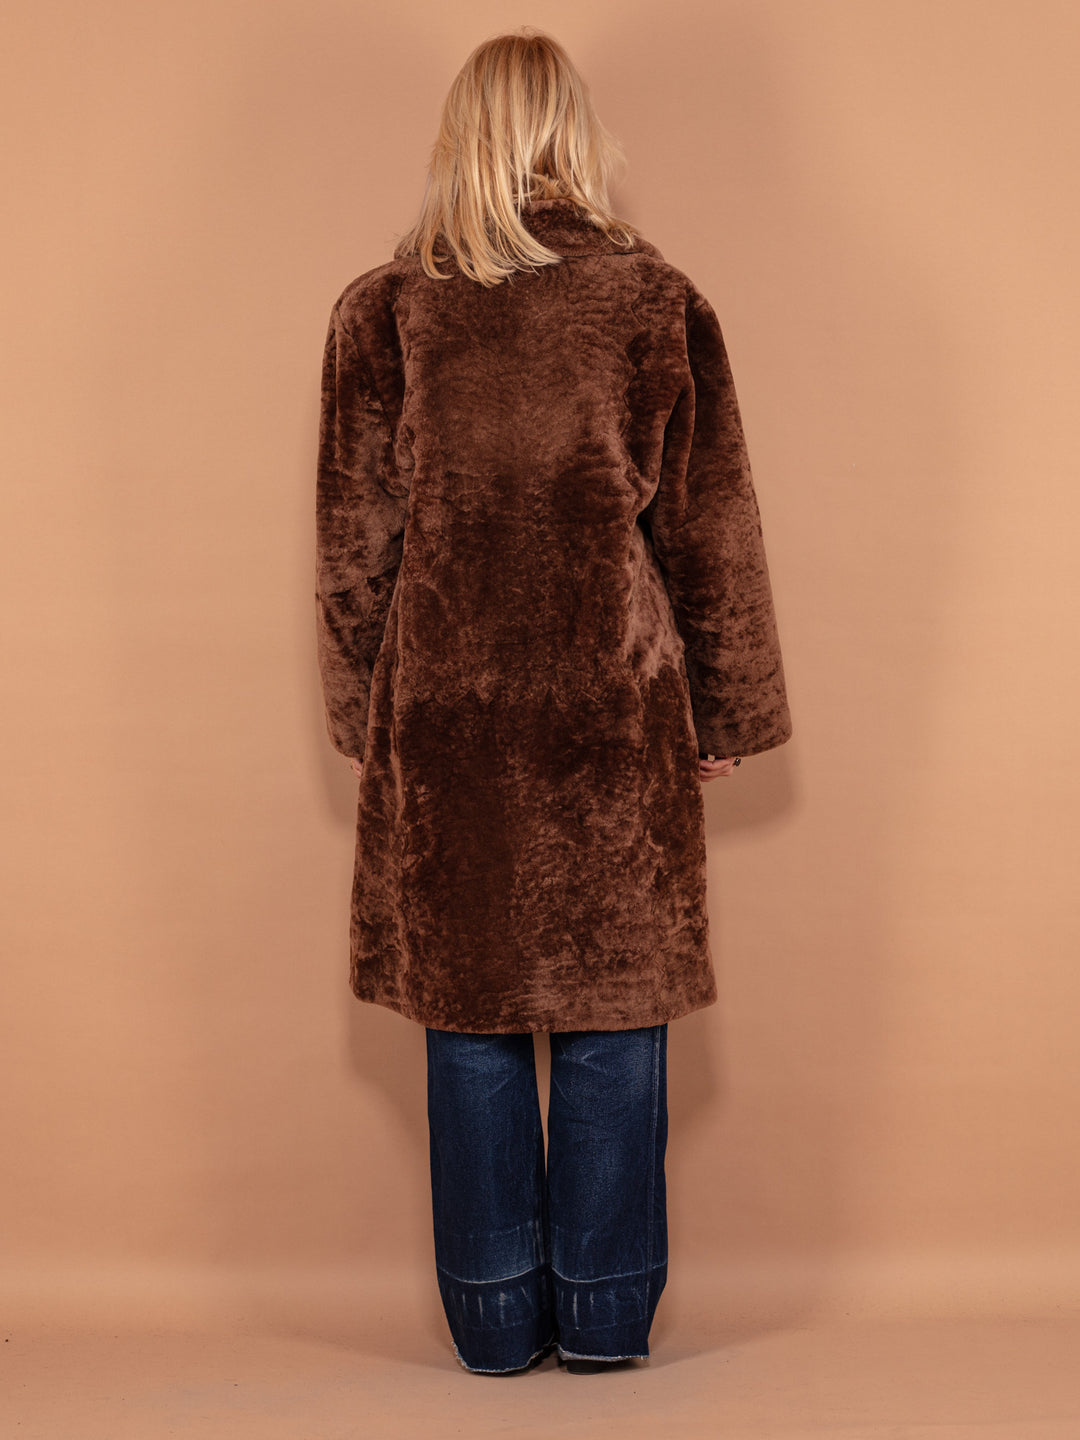 Sheepskin Wool Coat, Size L, Vintage Women Real Sheep Fur Coat, Brown Retro Wool Winter Coat, 70s Luxurious Outerwear, Elegant Fur Coat